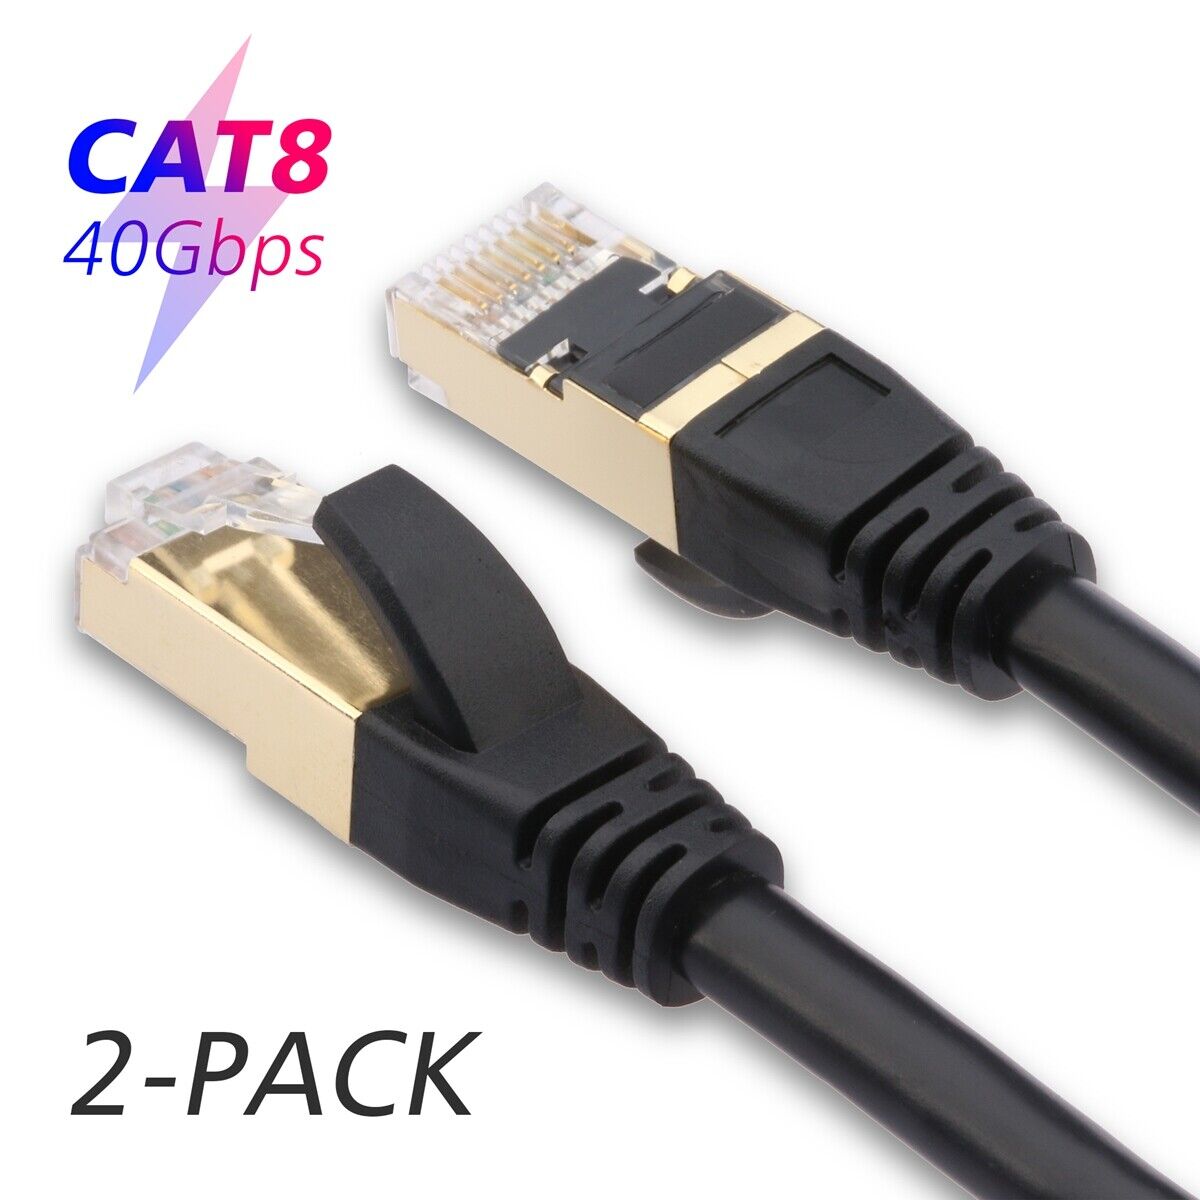 3 Pack Fastest Network Ethernet LAN Cable Cat 8 6ft 10ft 15ft 25ft 30ft 50ft Lot